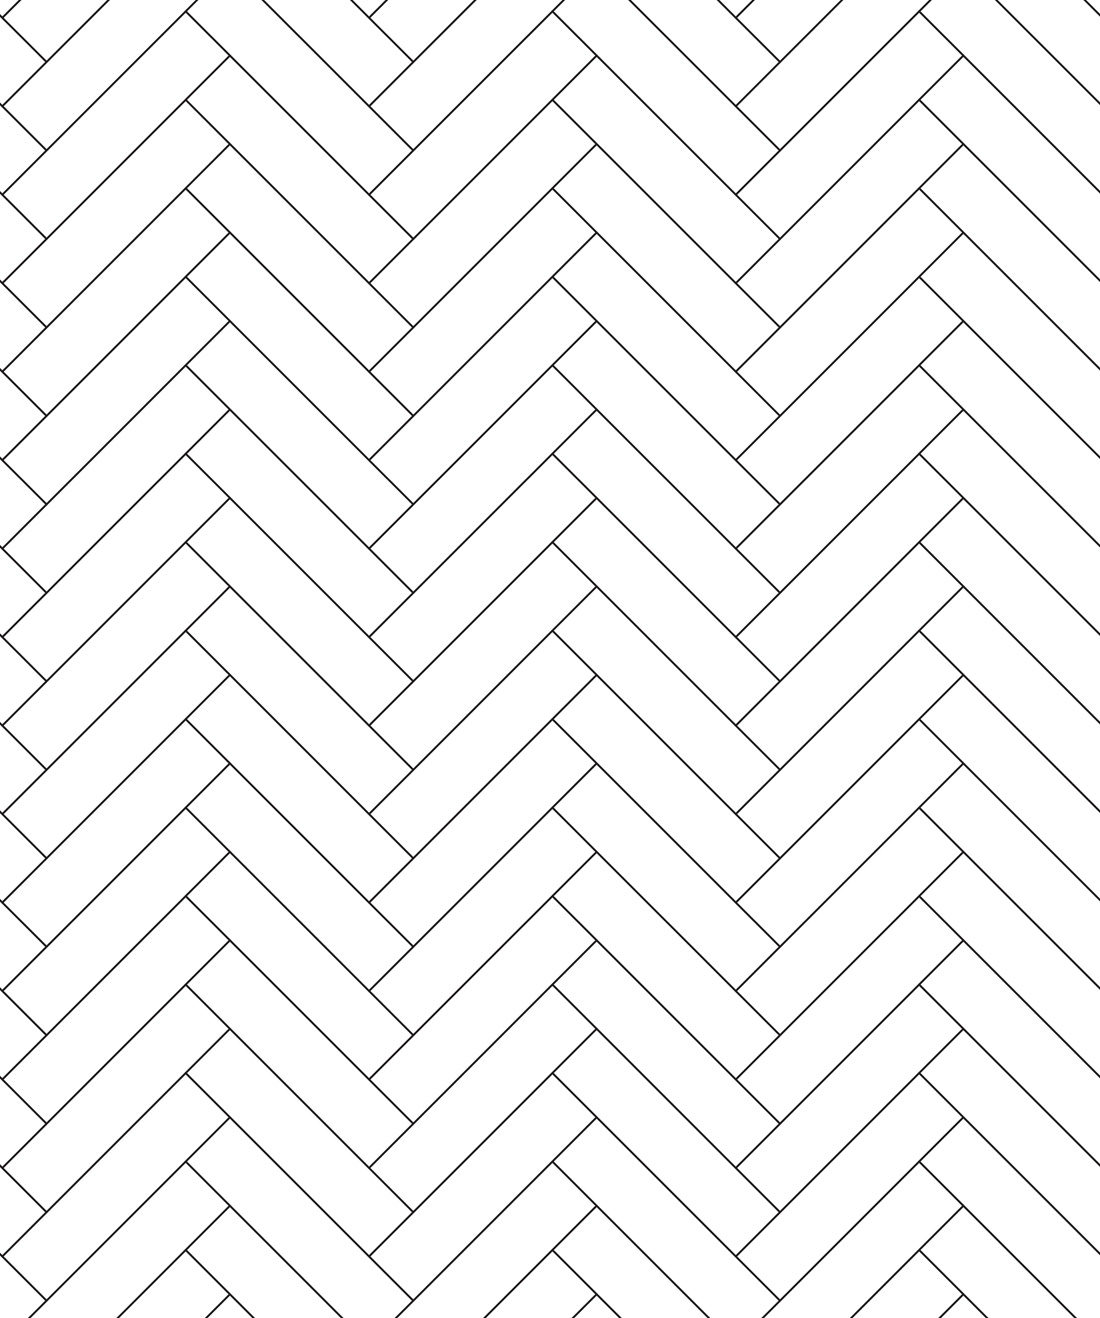 Tile Progress is a Simple Tile Wallpaper